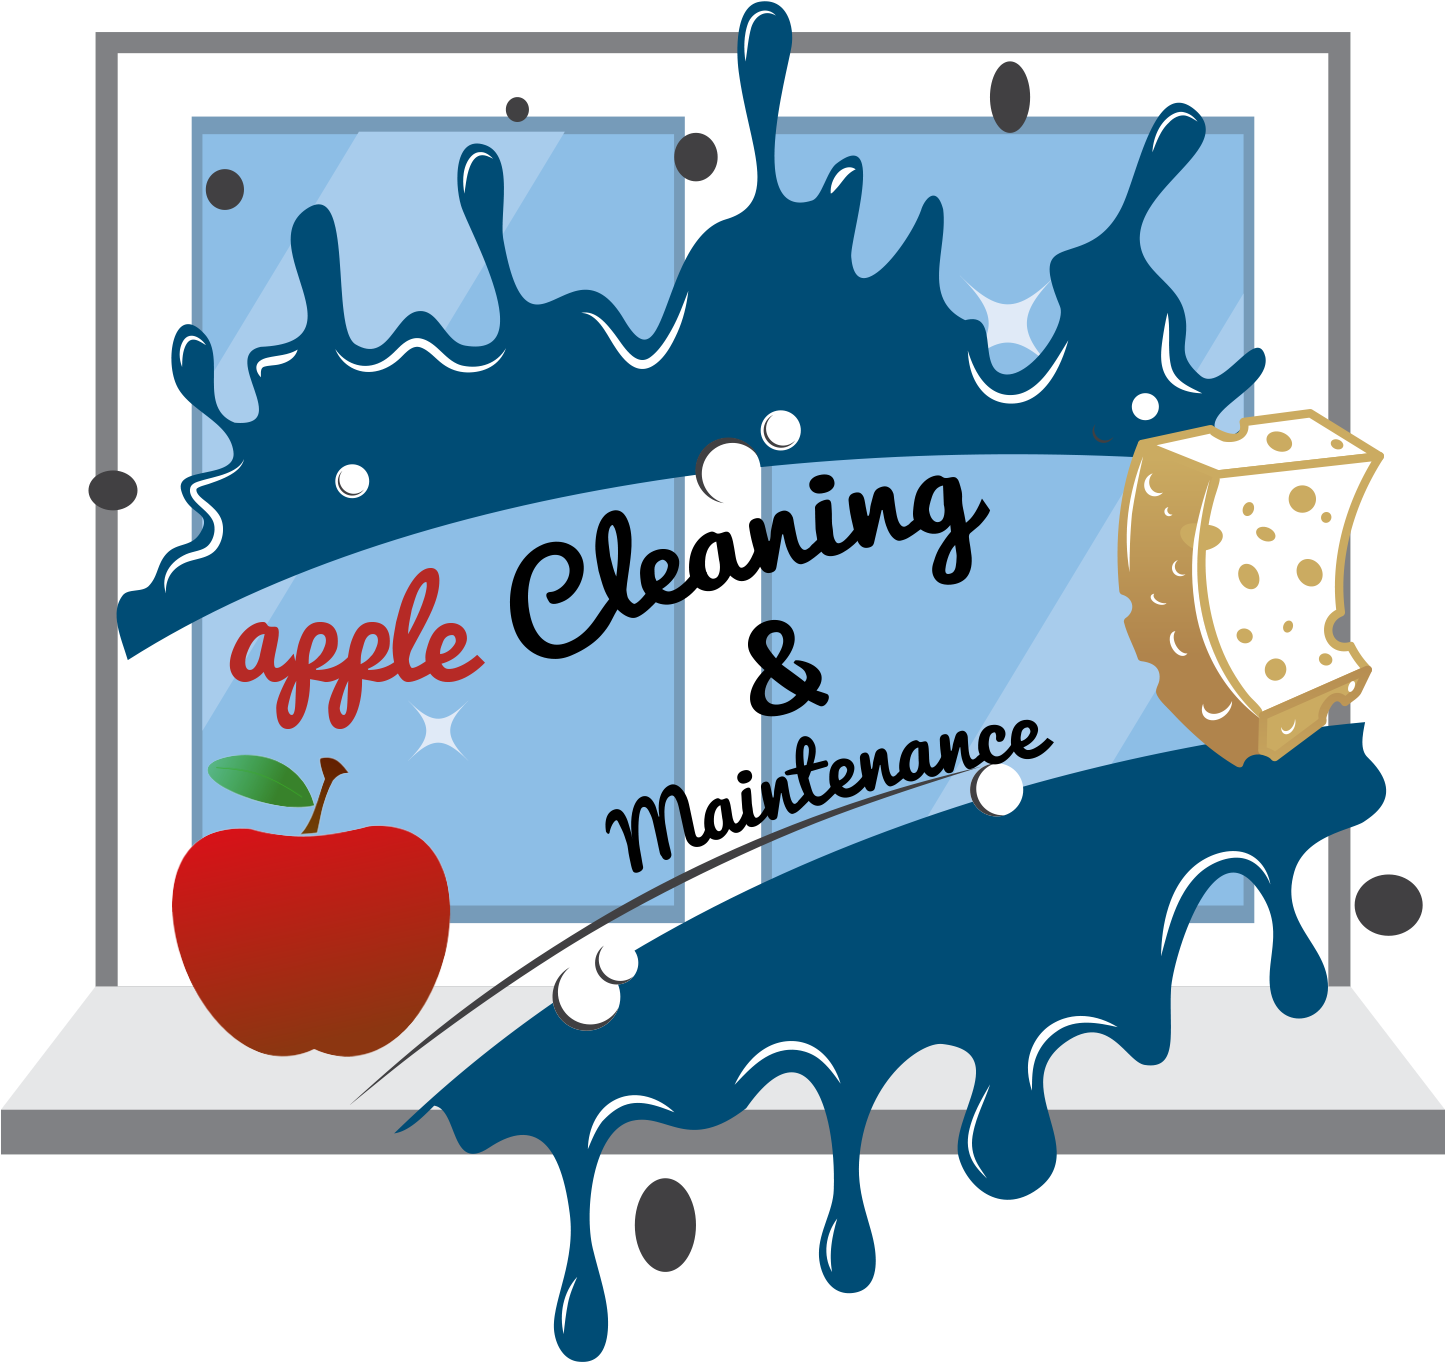 Apple Cleaning & Maintenance - Mcintosh (1444x1368)